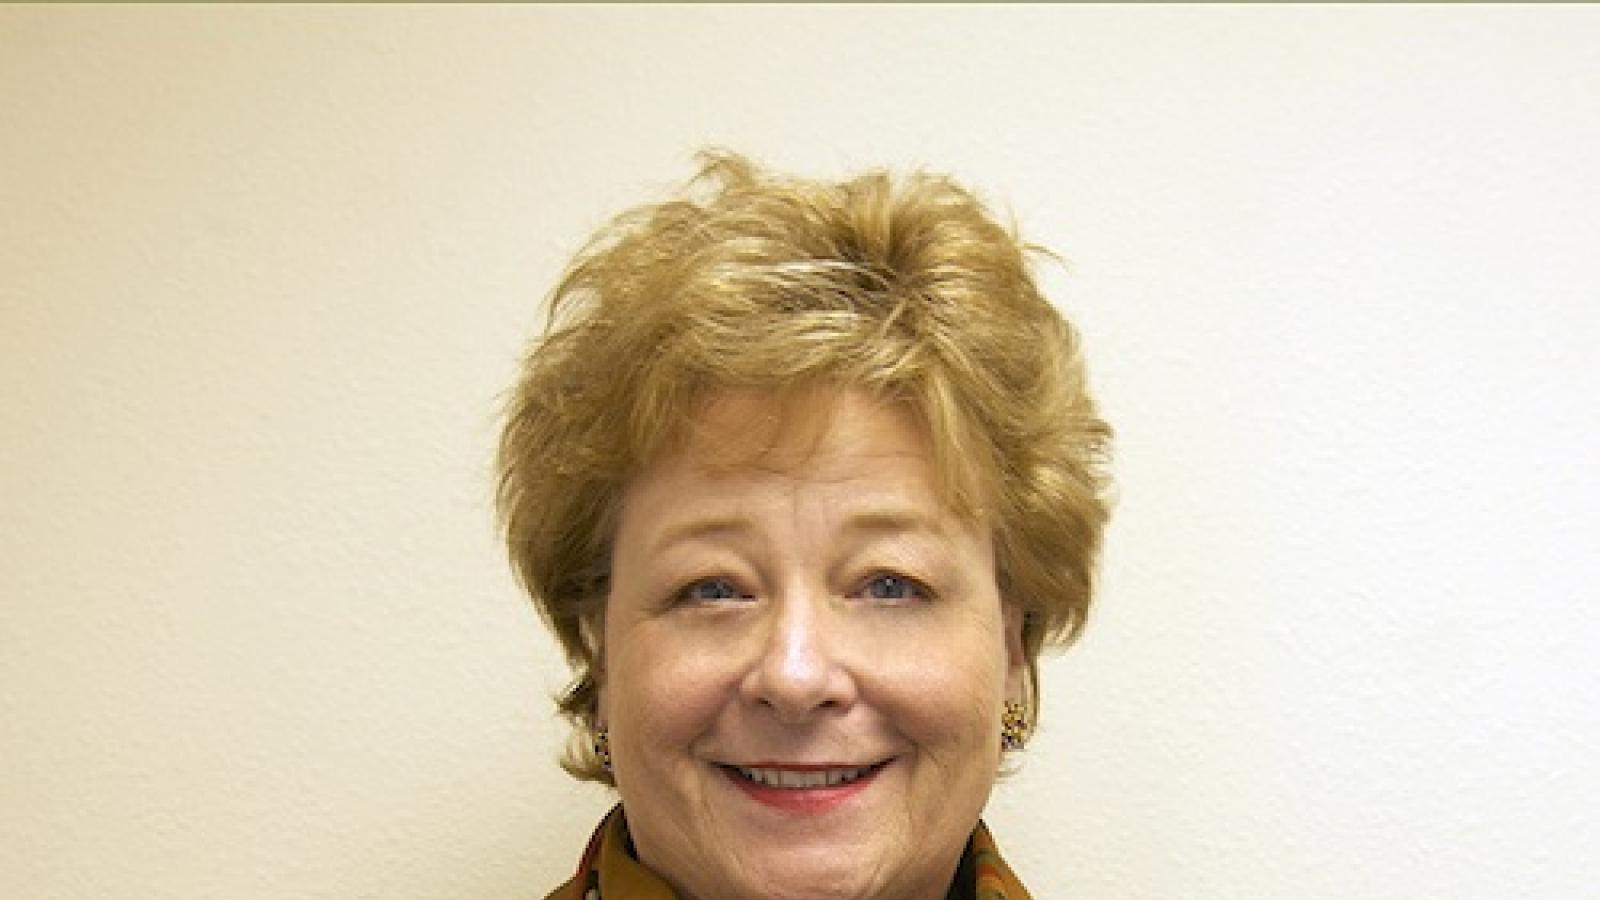 headshot of older white woman with short reddish hair